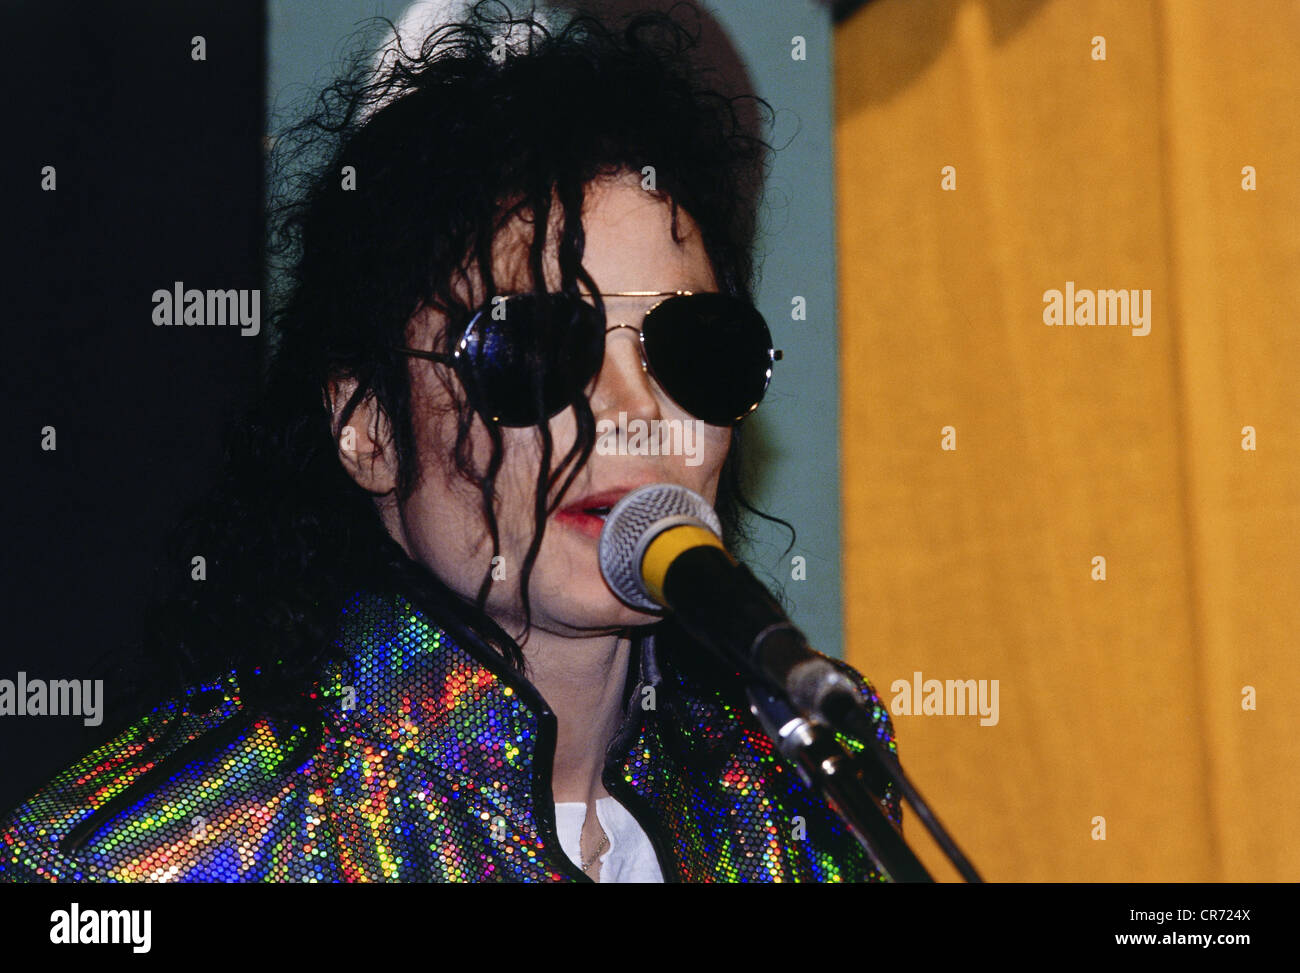 Jackson, Michael, 29.8.1958 - 25.6.2009, musicista americano (cantante pop), pubblico durante il suo concerto, Olympiastadion, Monaco, Germania, 28.6.1992, Foto Stock